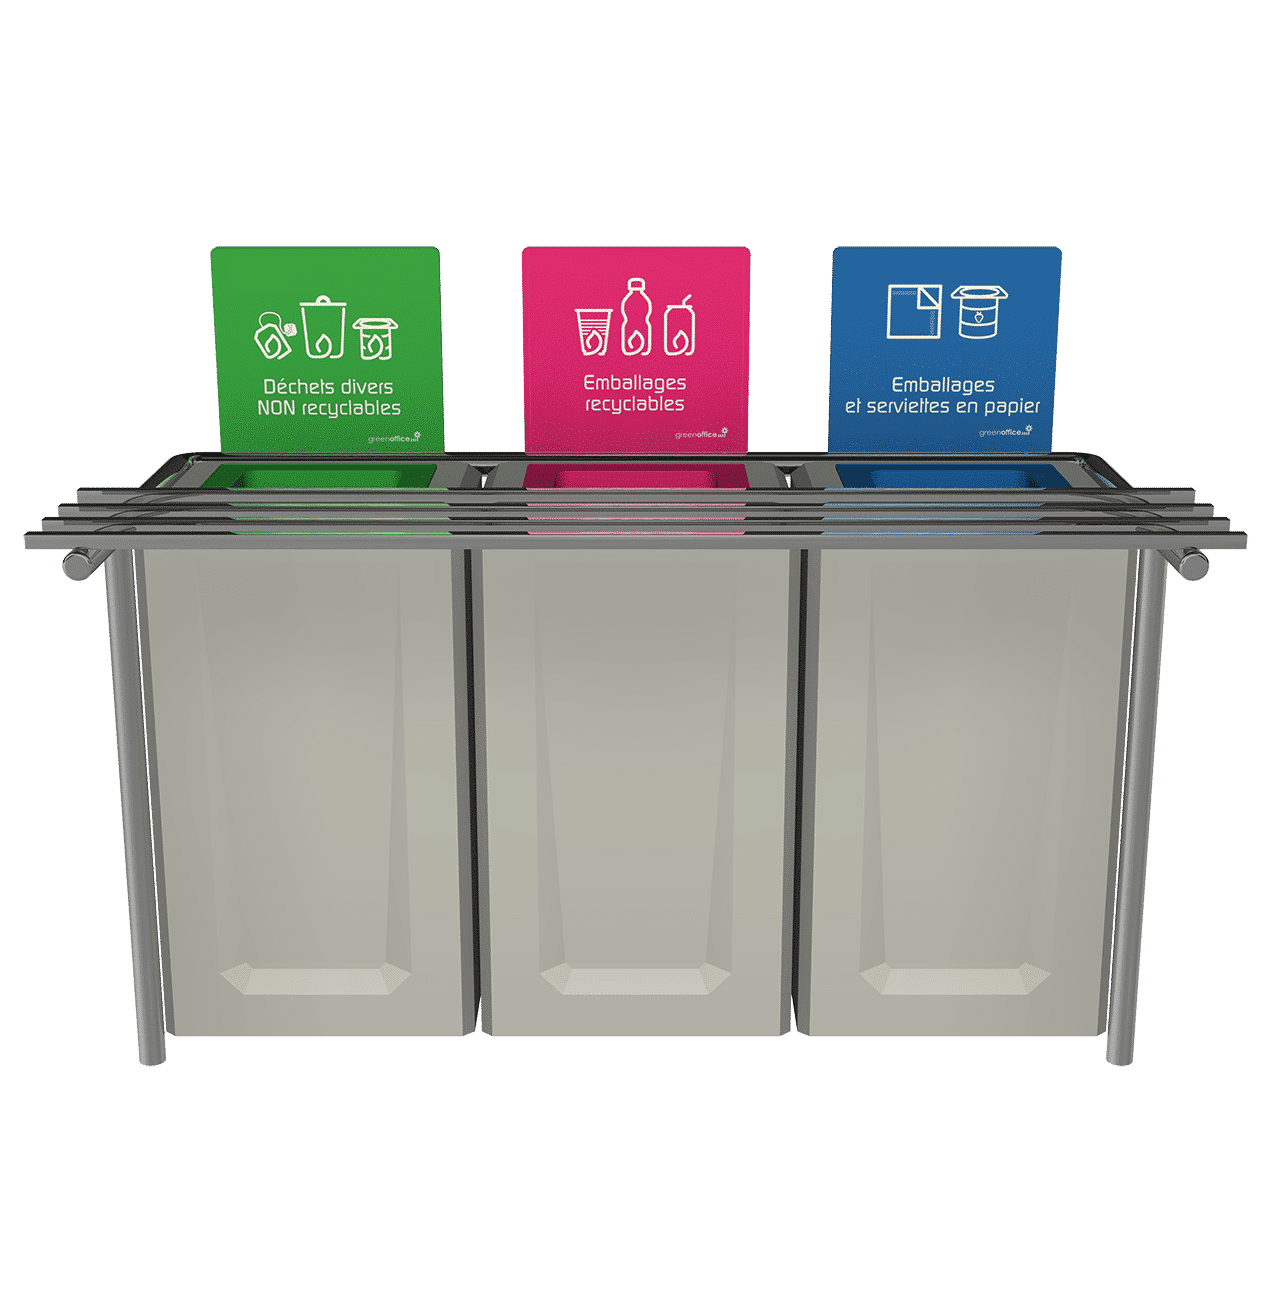 greenoffice-recycling-behältern-trigo-90-3